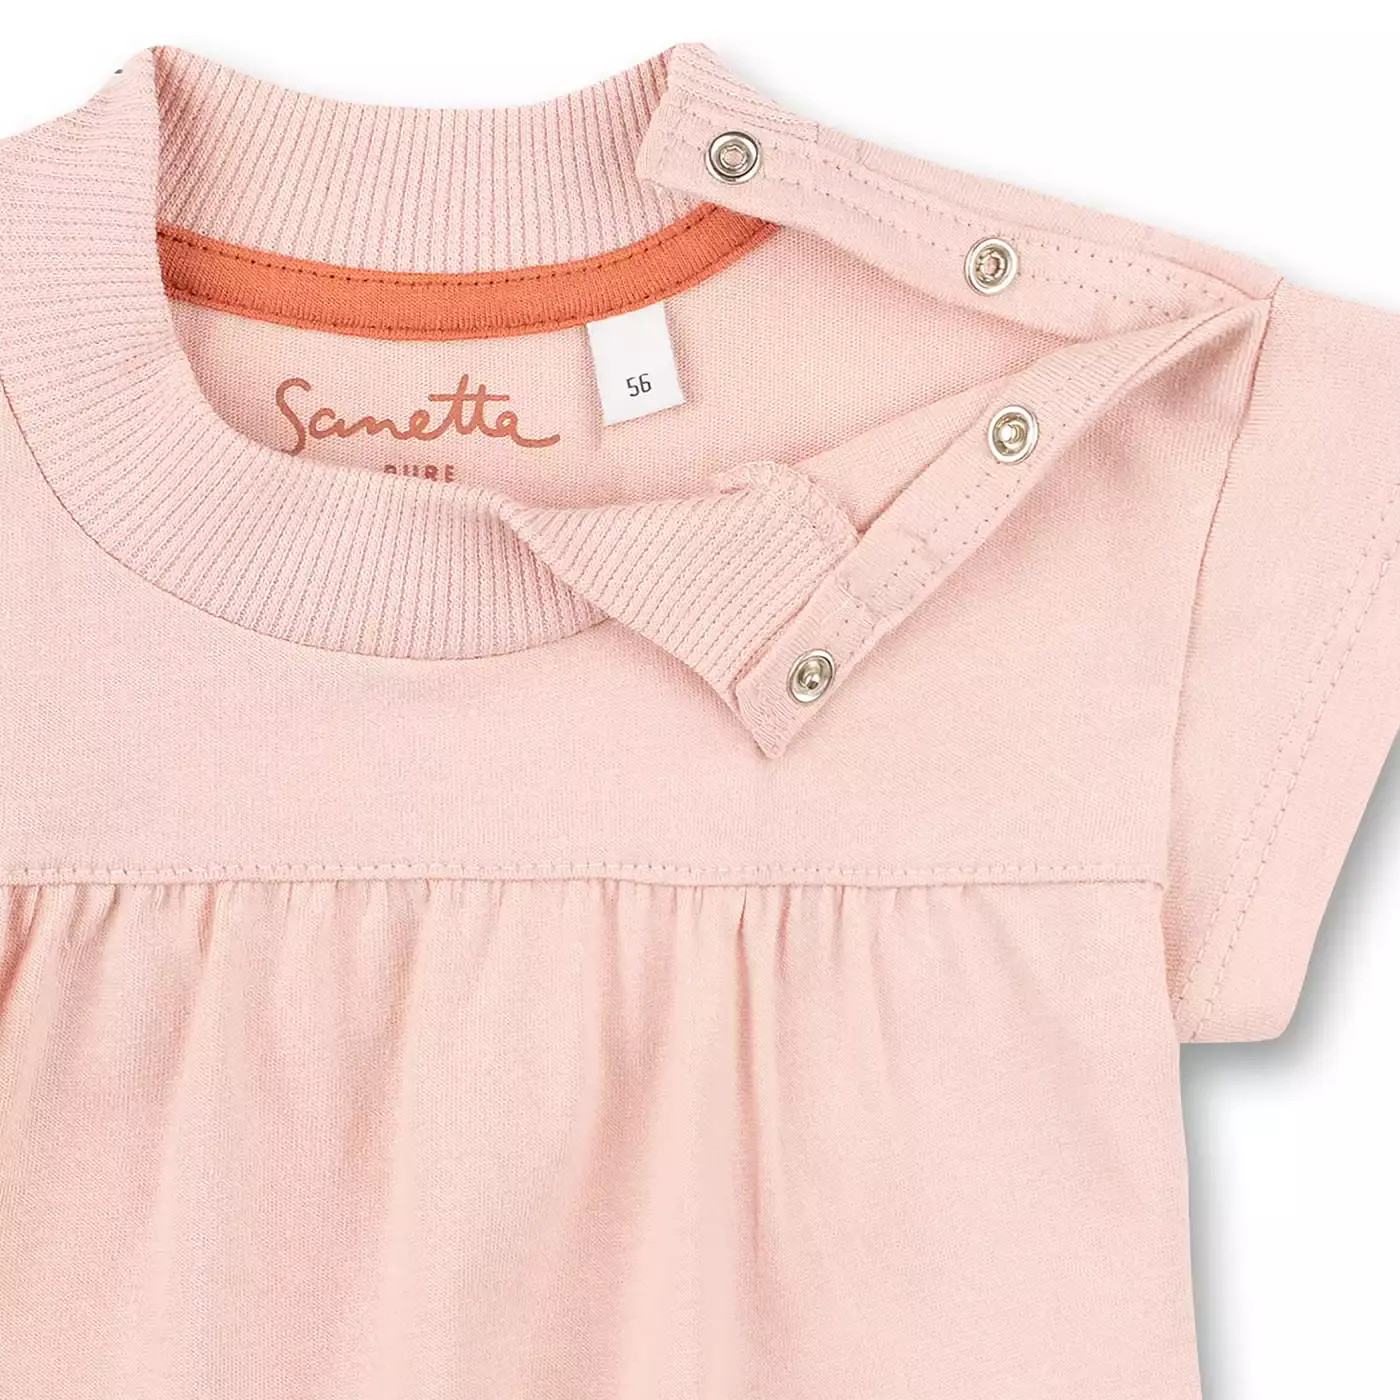 T-Shirt Pure Sanetta Pink Rosa 2006579870004 4